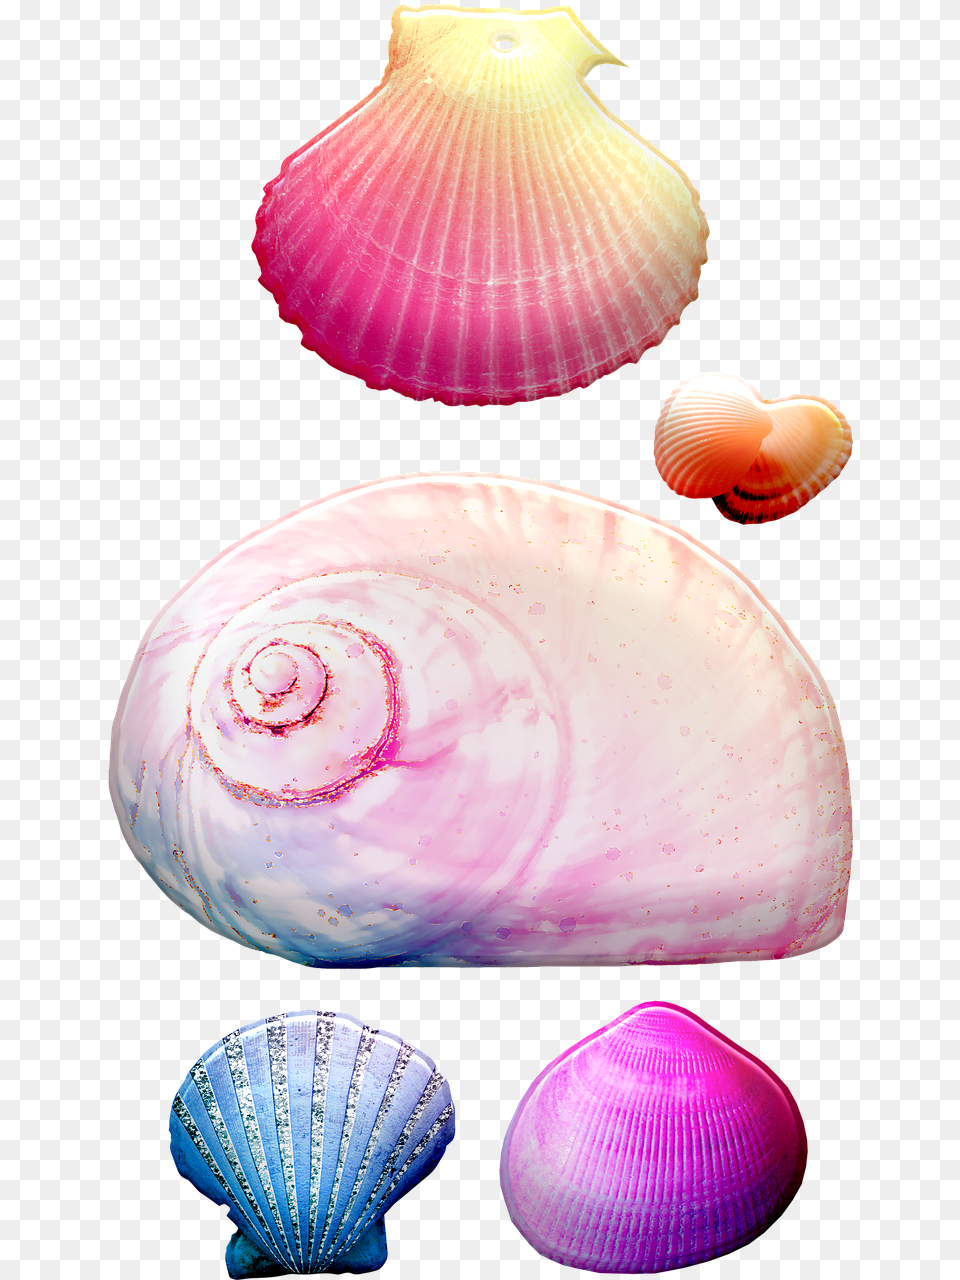 Seashells Shells Conch Image On Pixabay, Animal, Clam, Food, Invertebrate Free Transparent Png